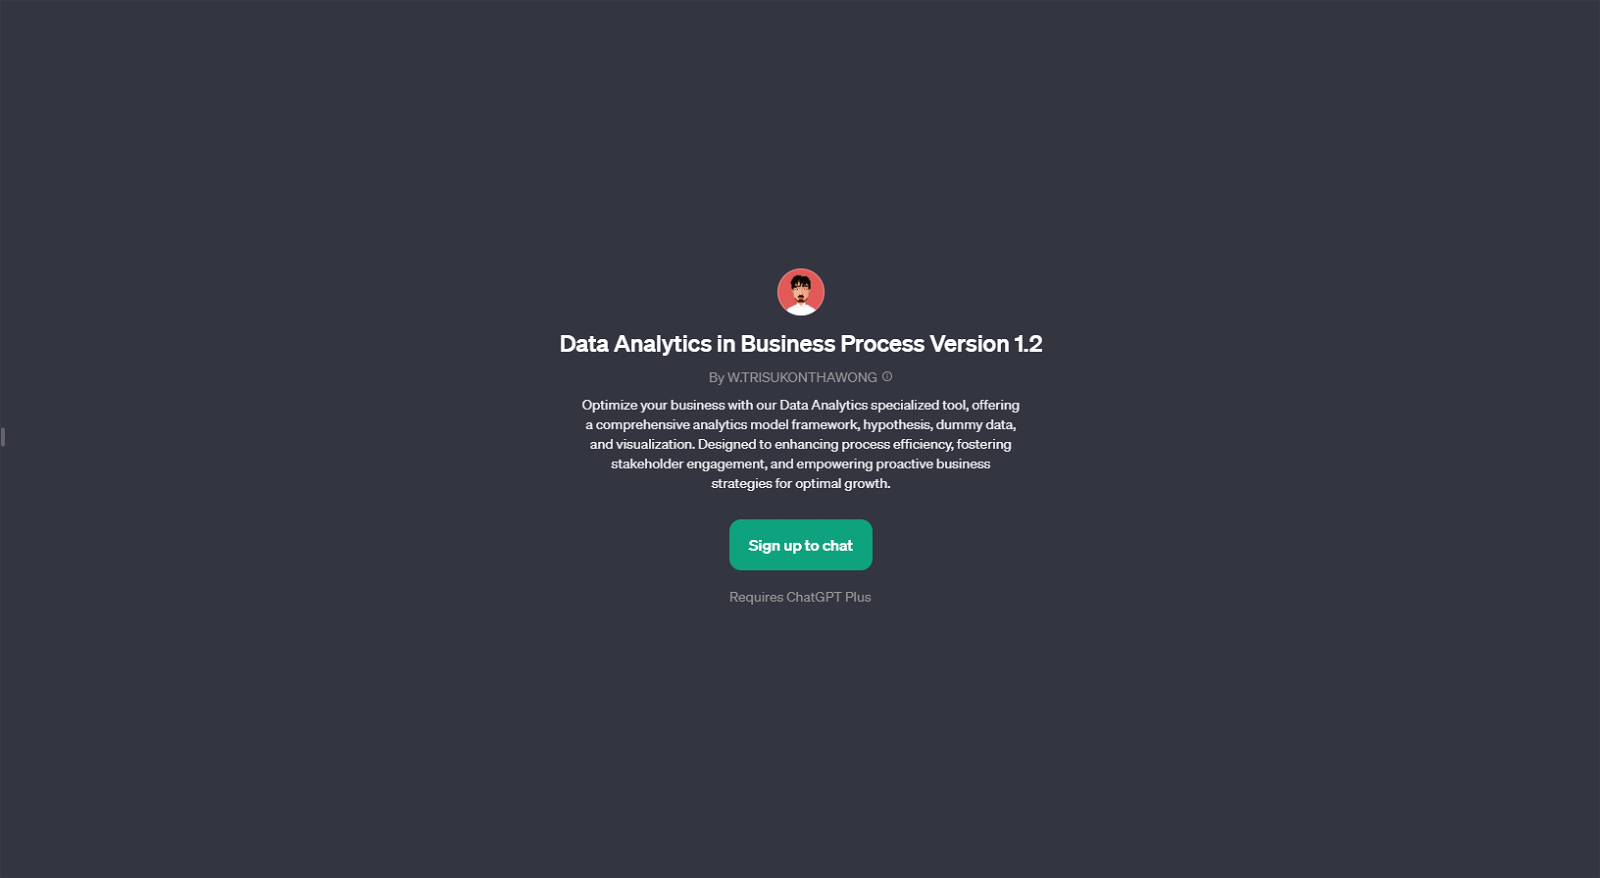 Data Analytics in Business Process Version 1.2 website